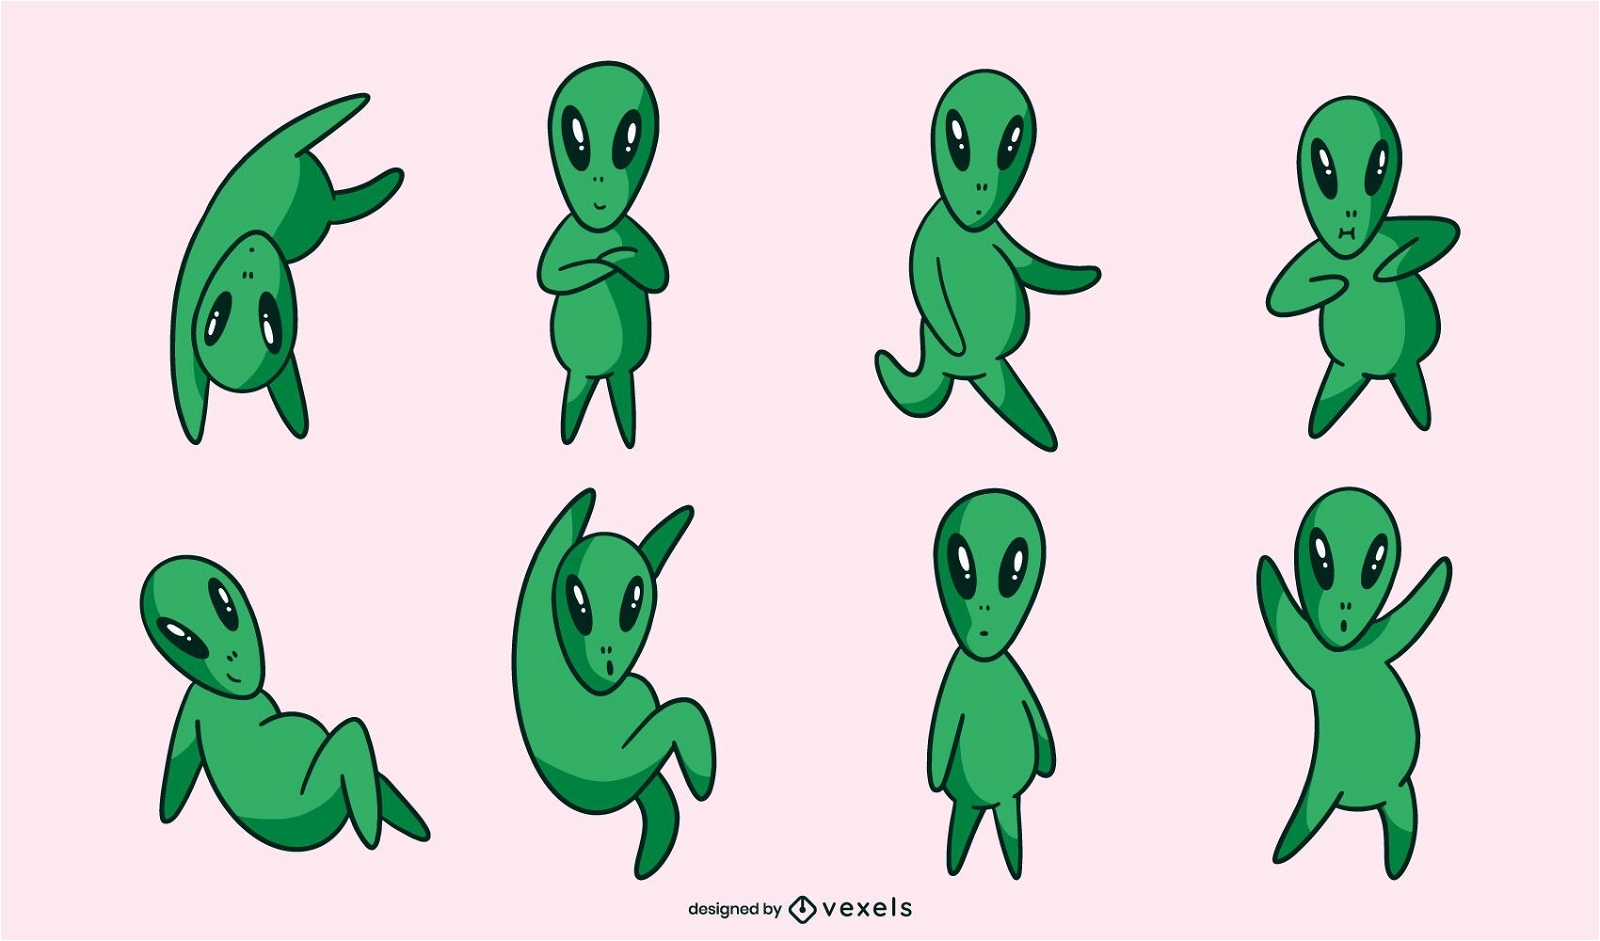 Cute green alien character poses set